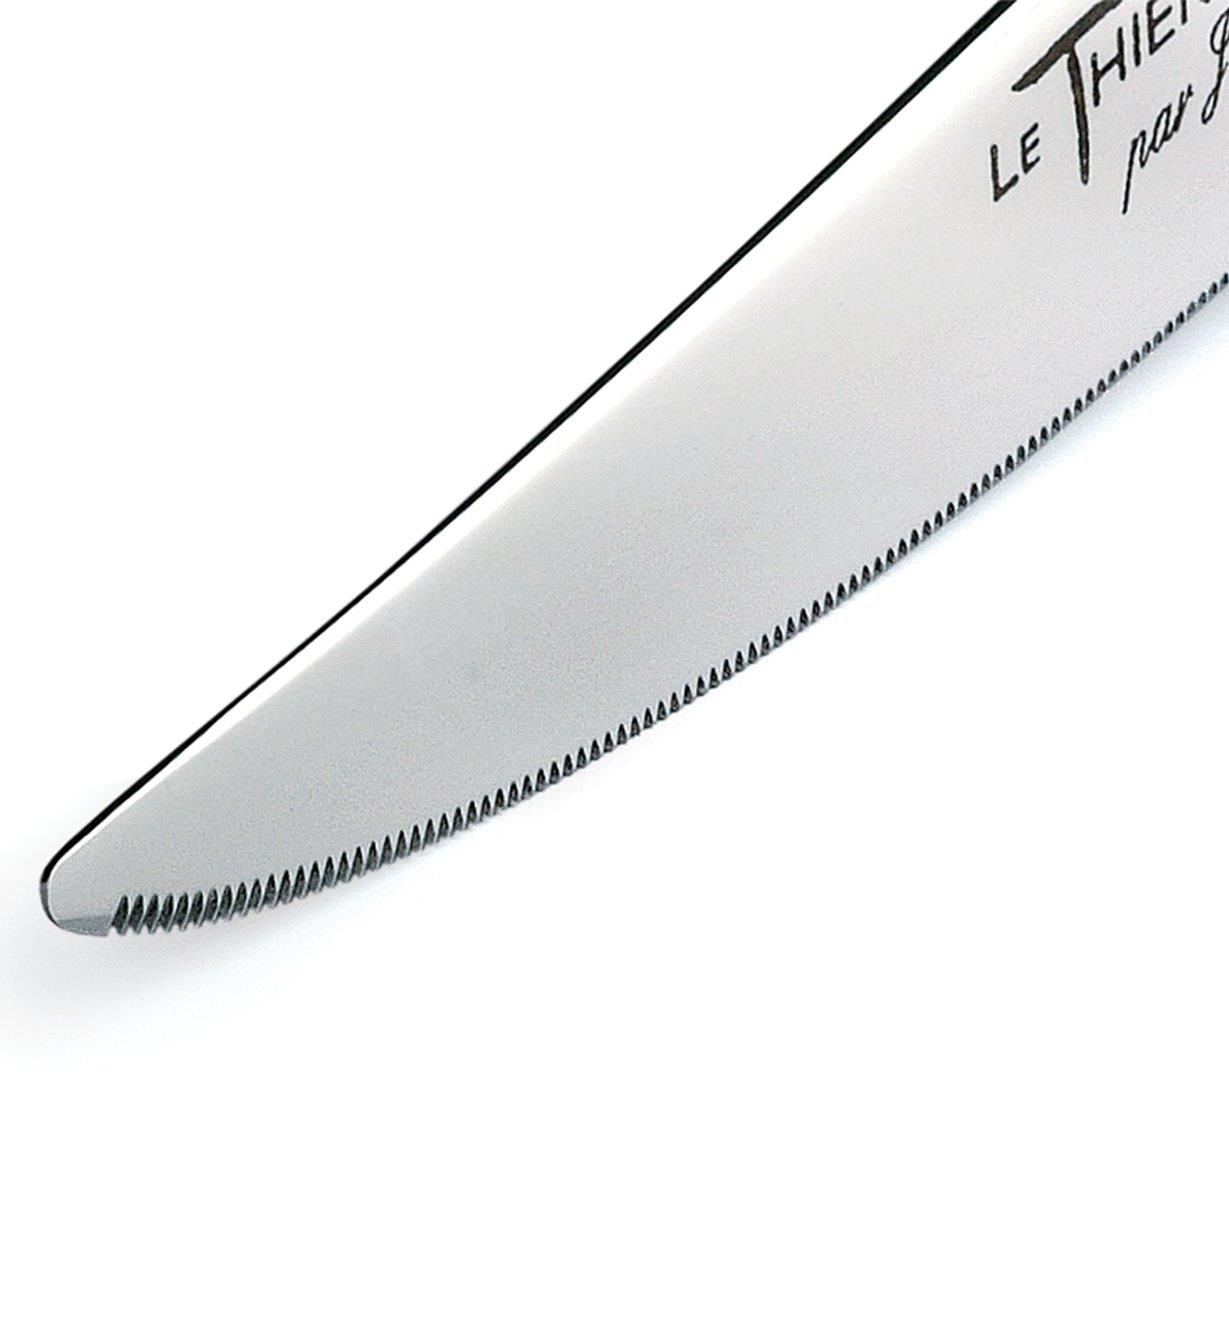 Close-up of bistro knife blade